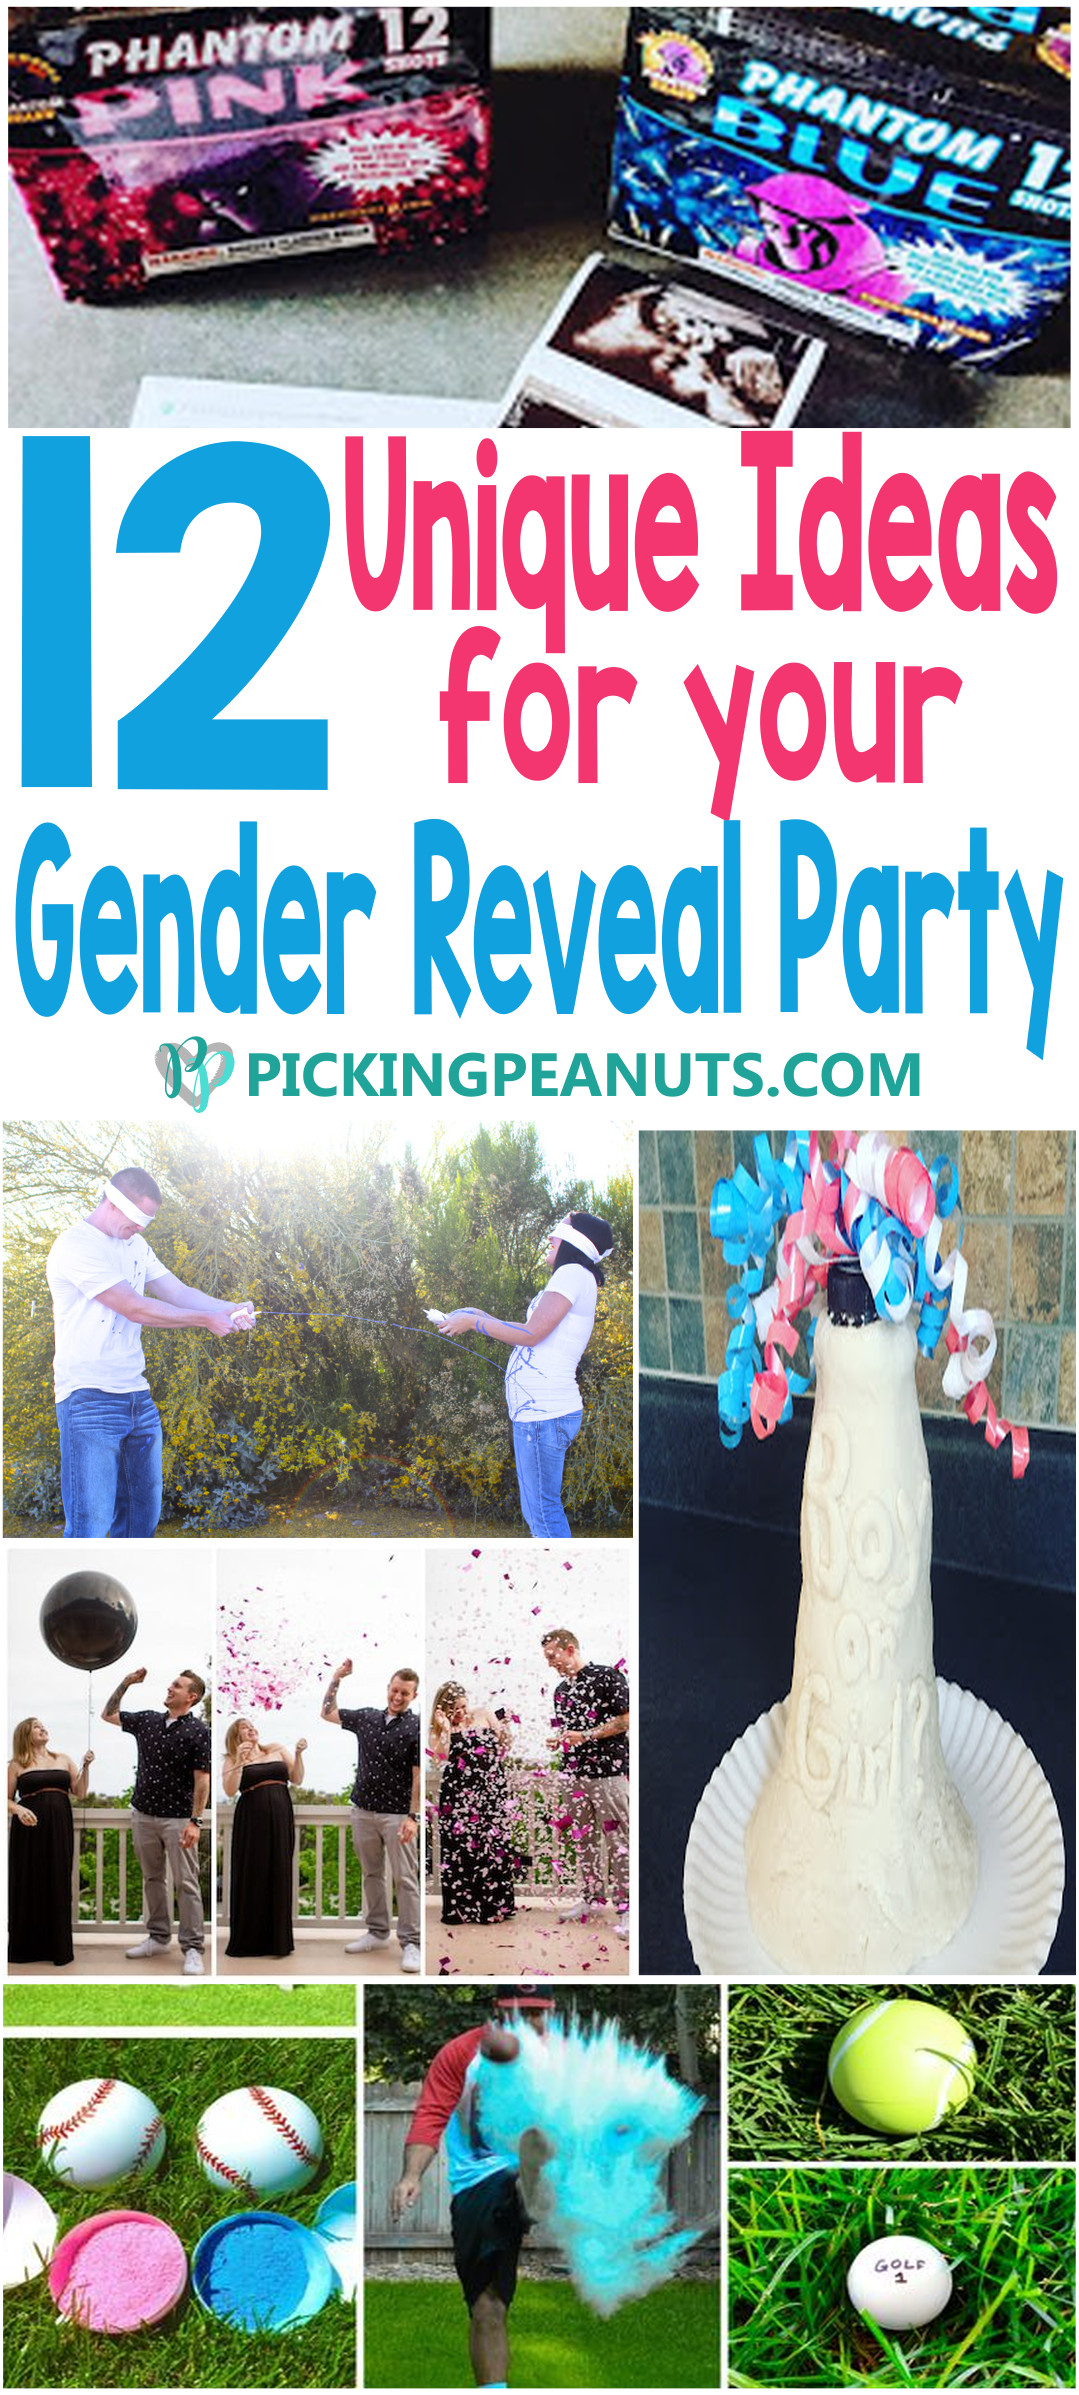 Cool Gender Reveal Party Ideas
 12 Unique Gender Reveal Party Ideas PickingPeanuts